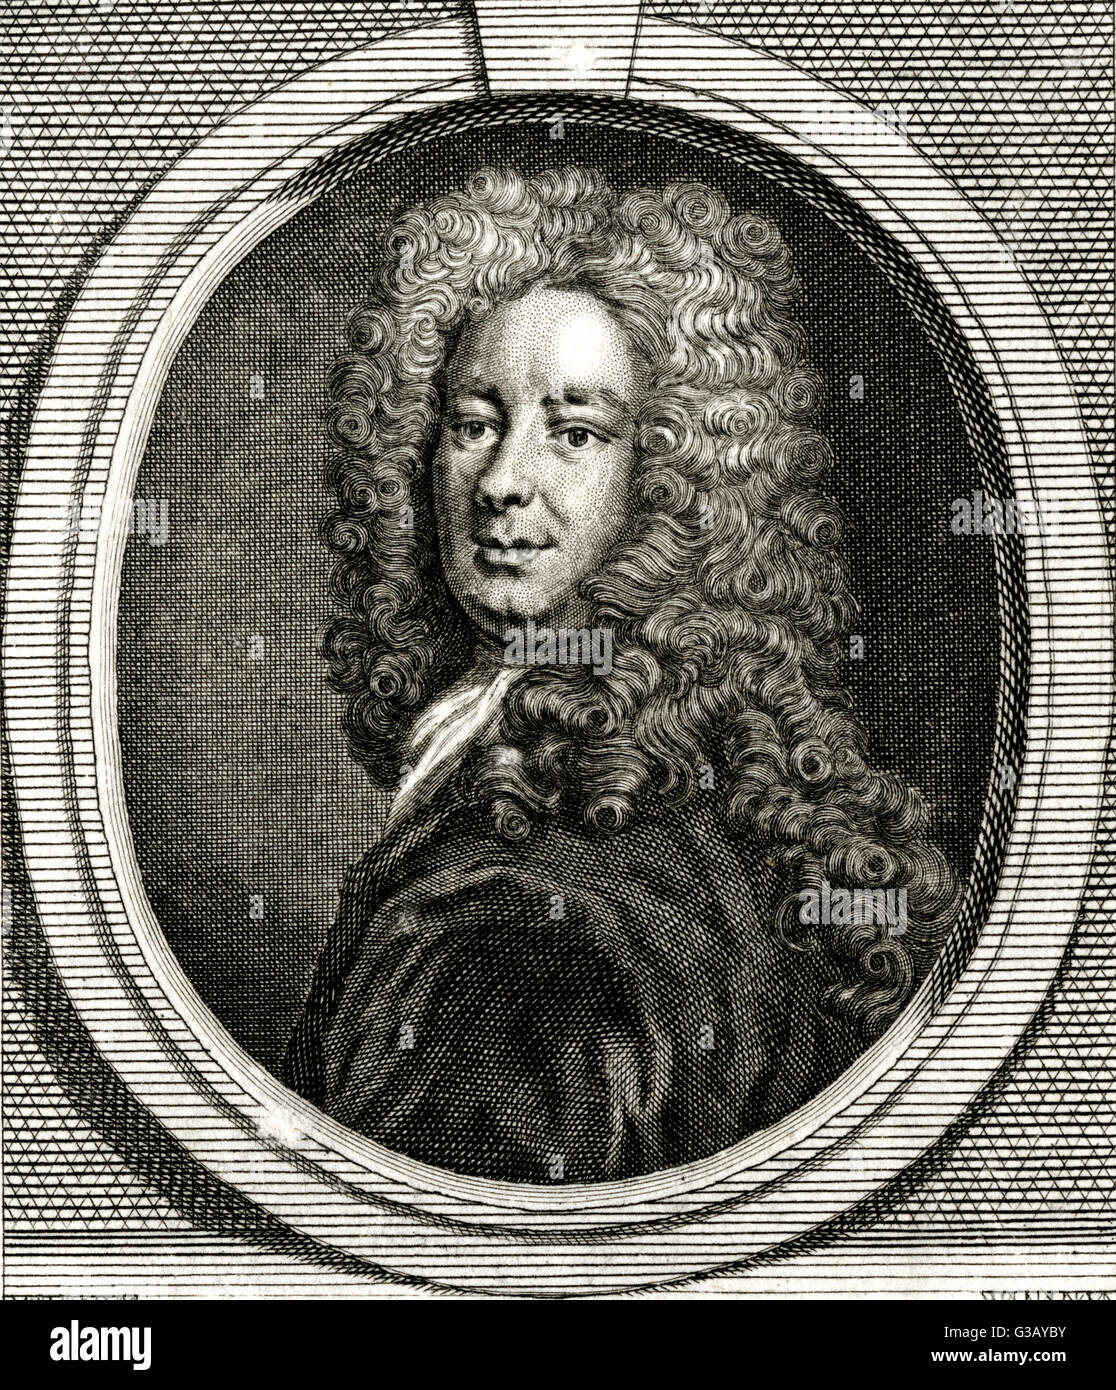 SIR SAMUEL GARTH medico e poeta data: 1661 - 1719 Foto Stock